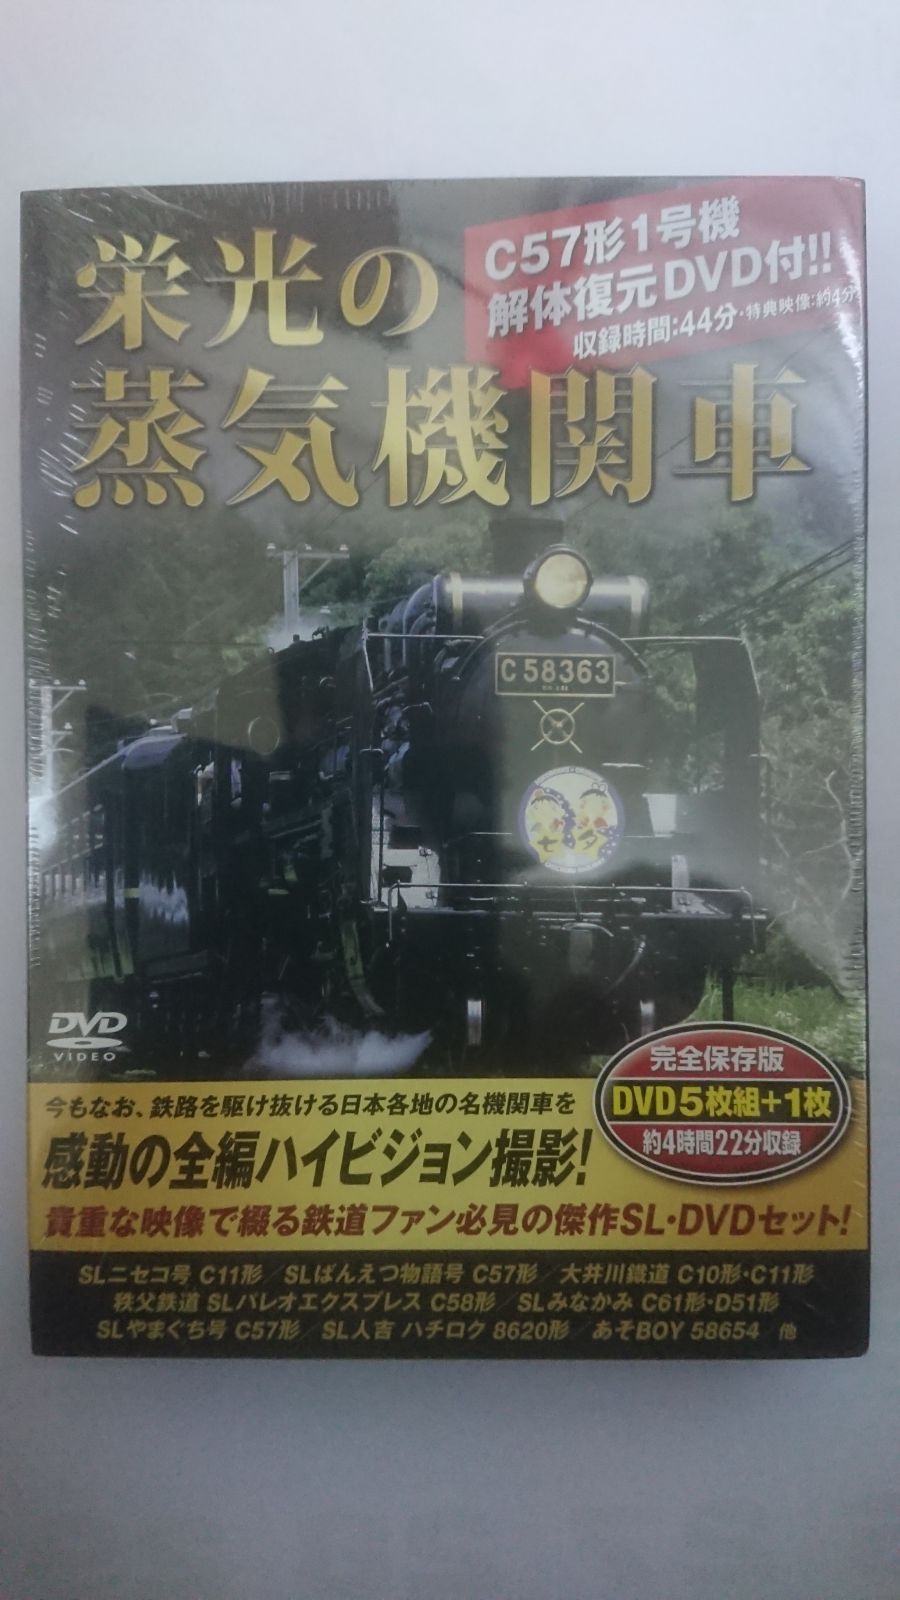 栄光の蒸気機関車 DVD5枚組 1枚 趣味、実用 | huroncmh.org